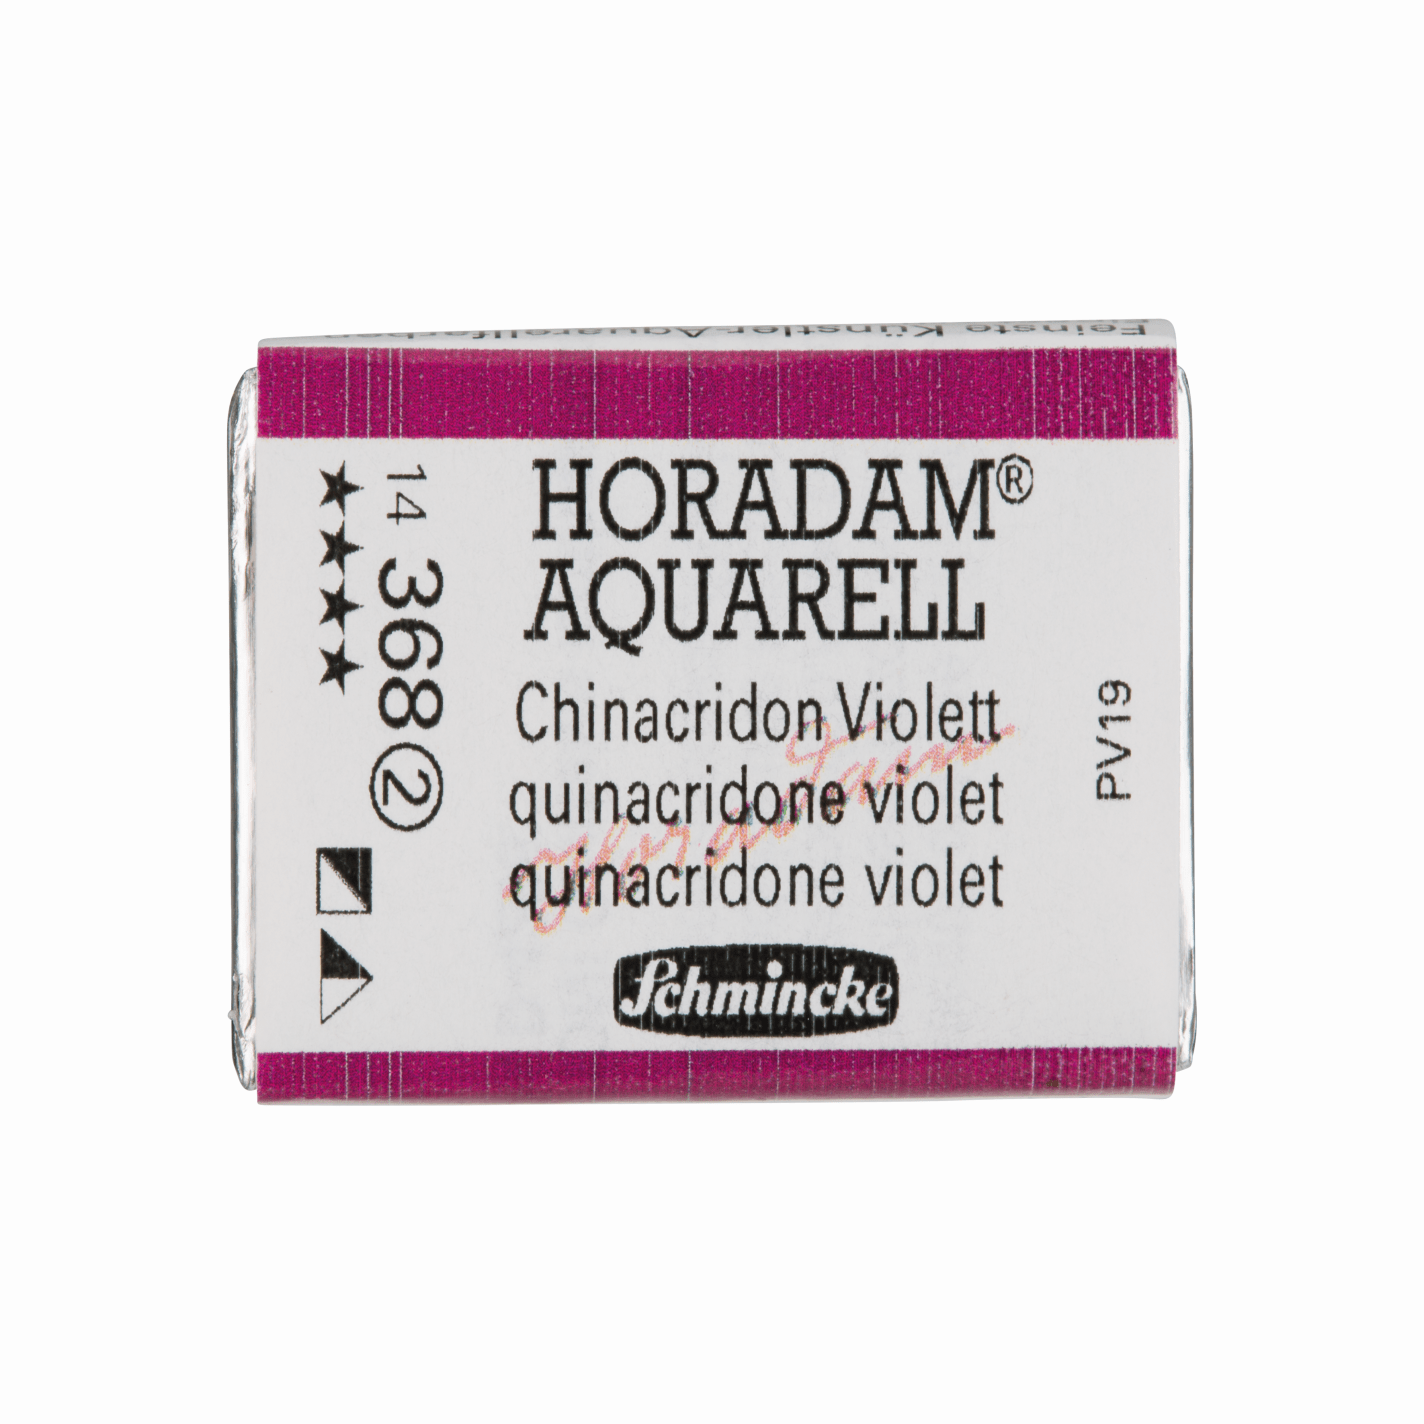 Schmincke Horadam Aquarell pans 1/1 pan Quinacridone Violet